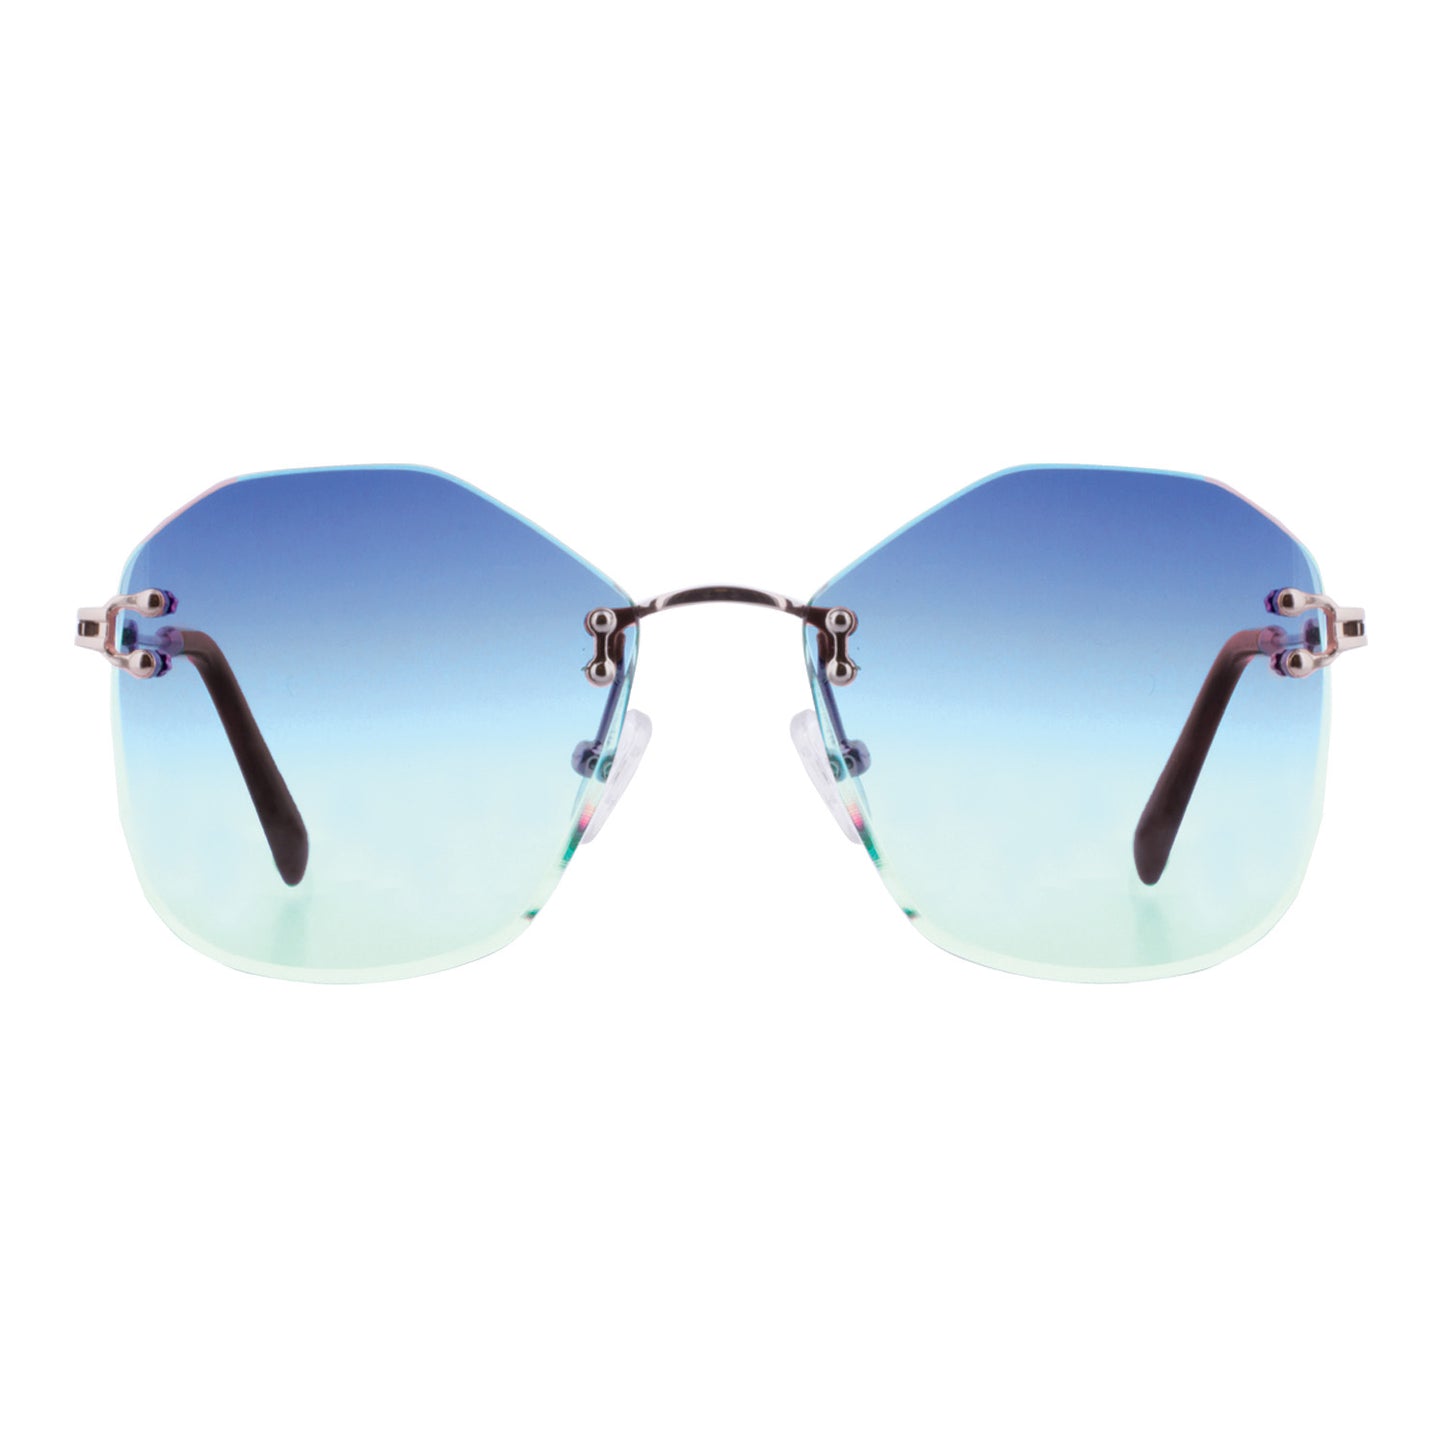 Mokki Britney Please Sunglasses in blue